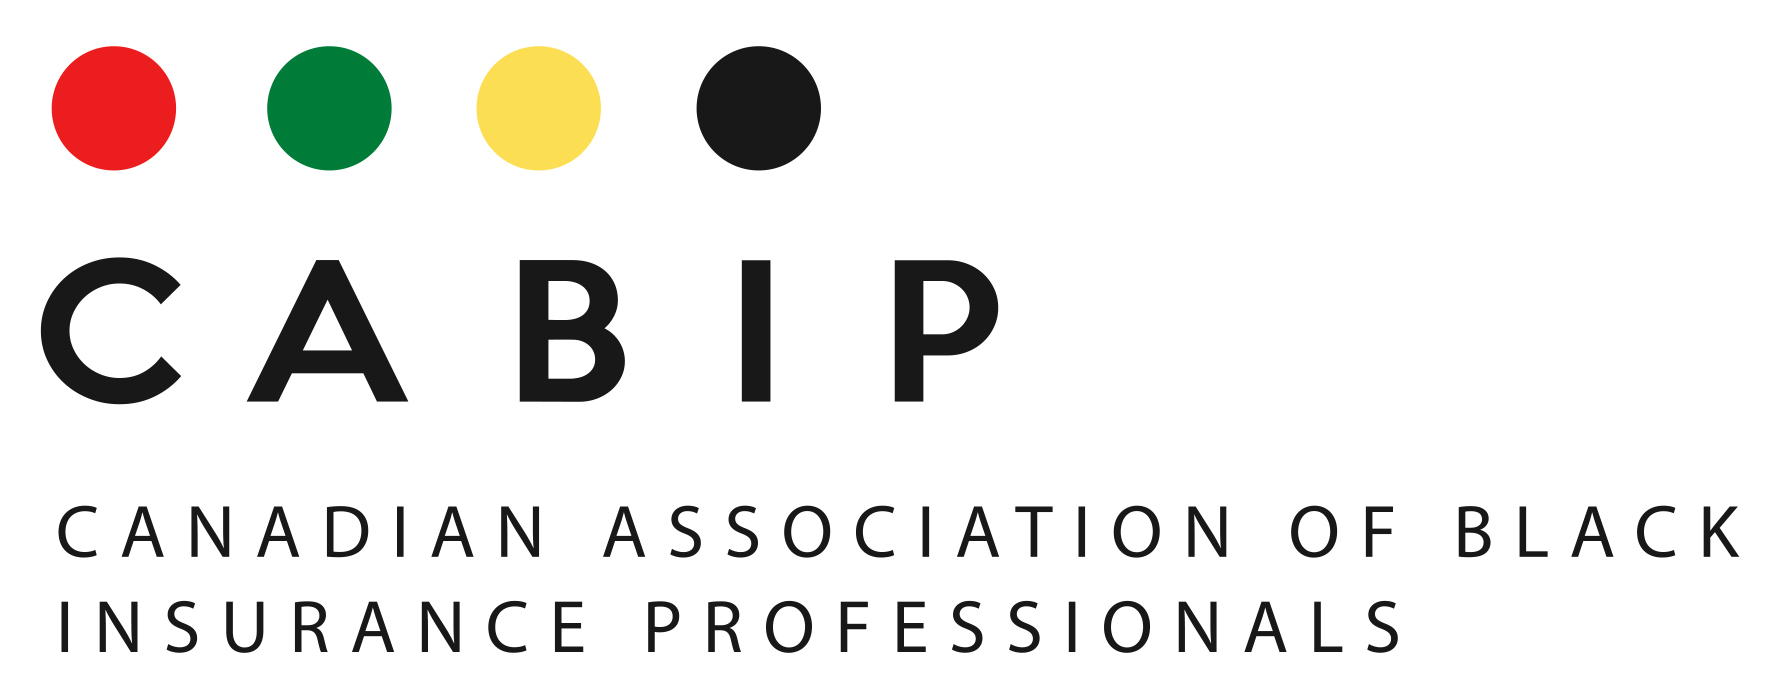 Canadian Association of Black Insurance Professionals (CABIP)